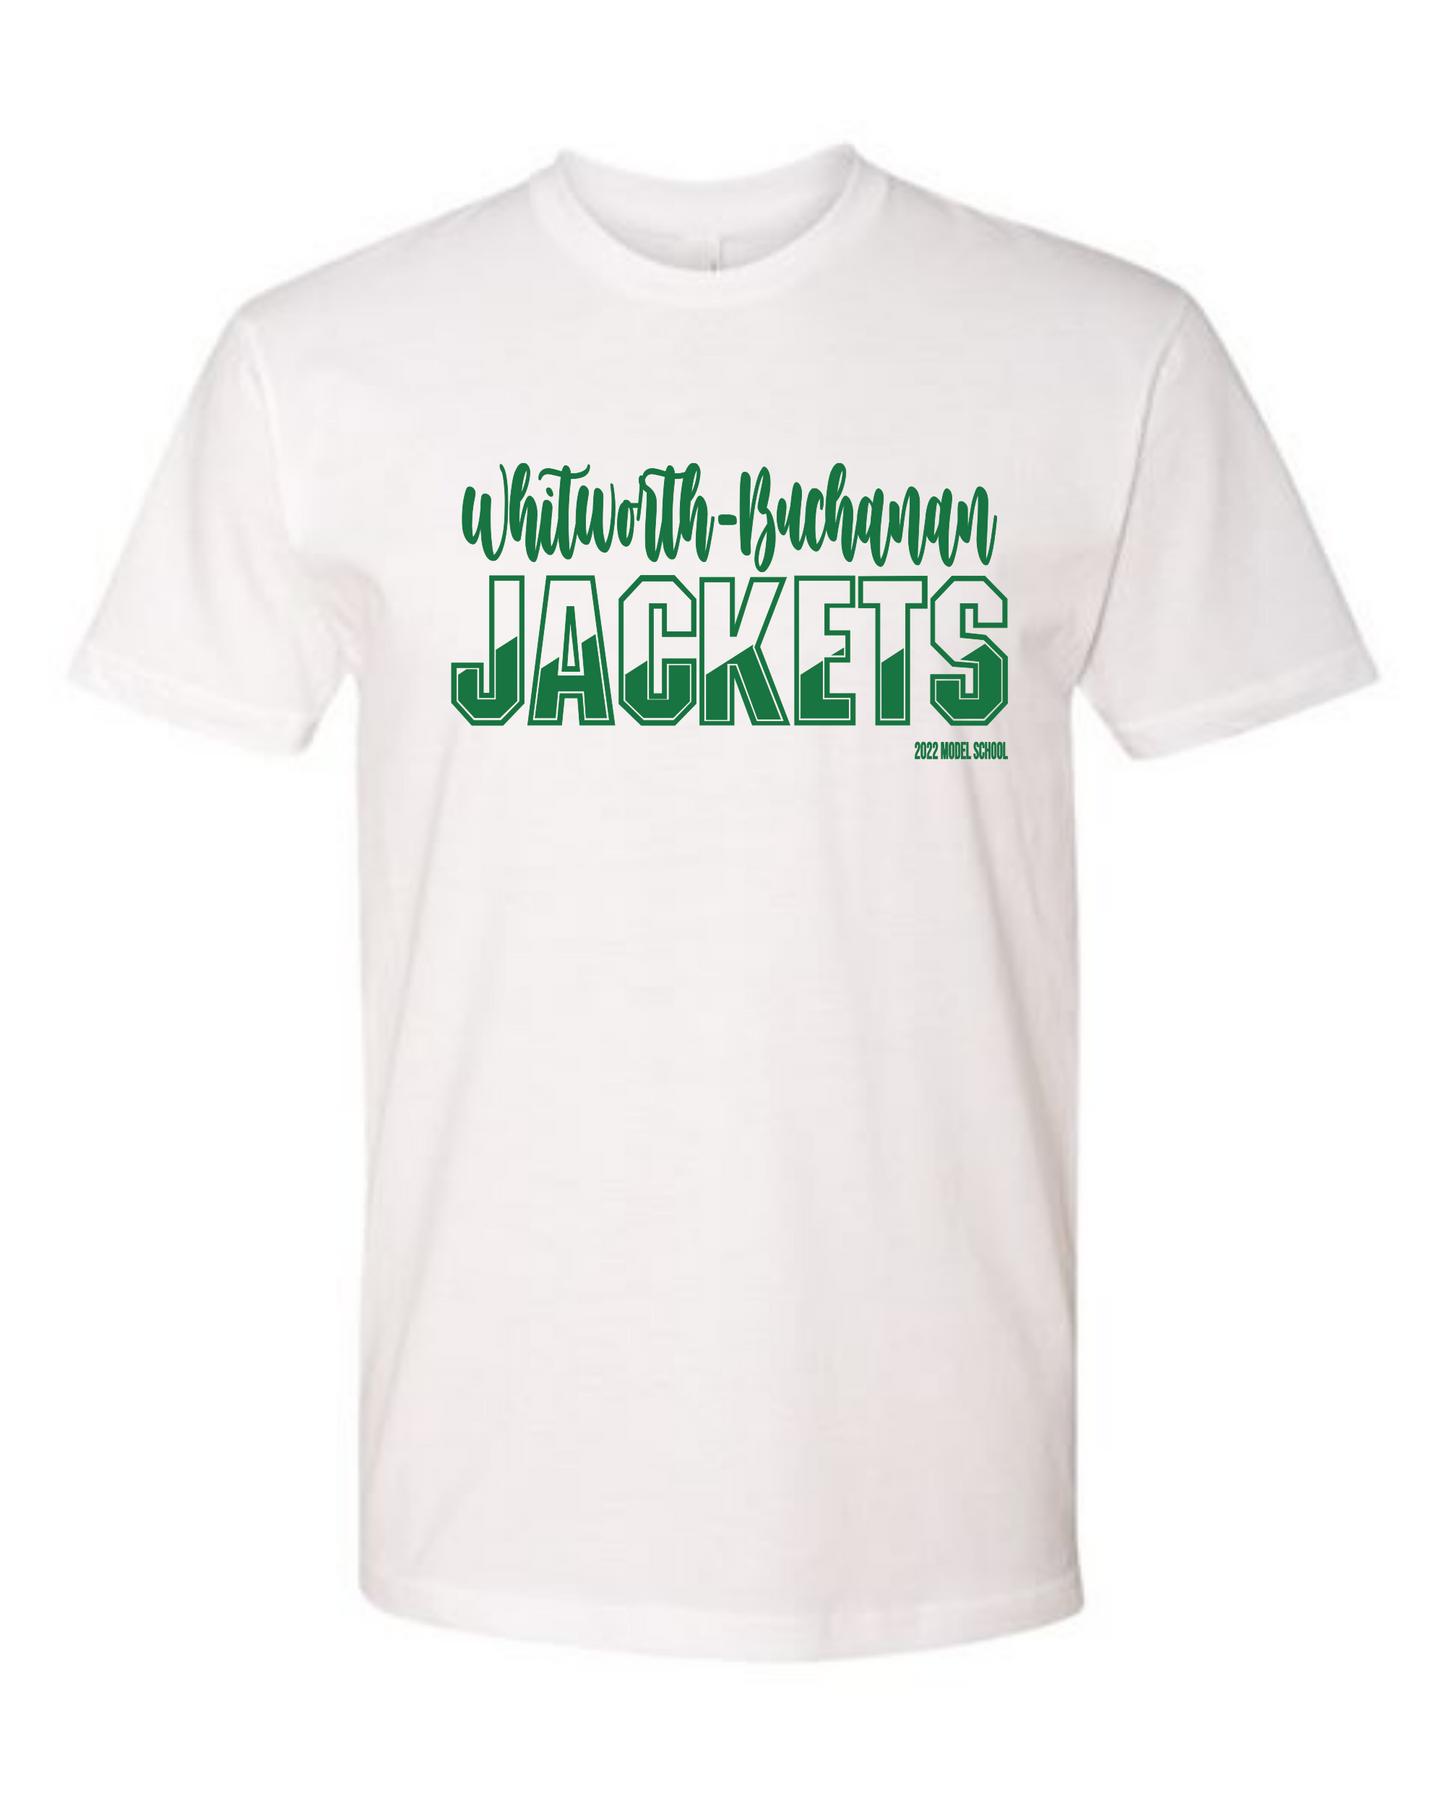 Whitworth-Buchanan Jackets 2022 Model School Tshirt